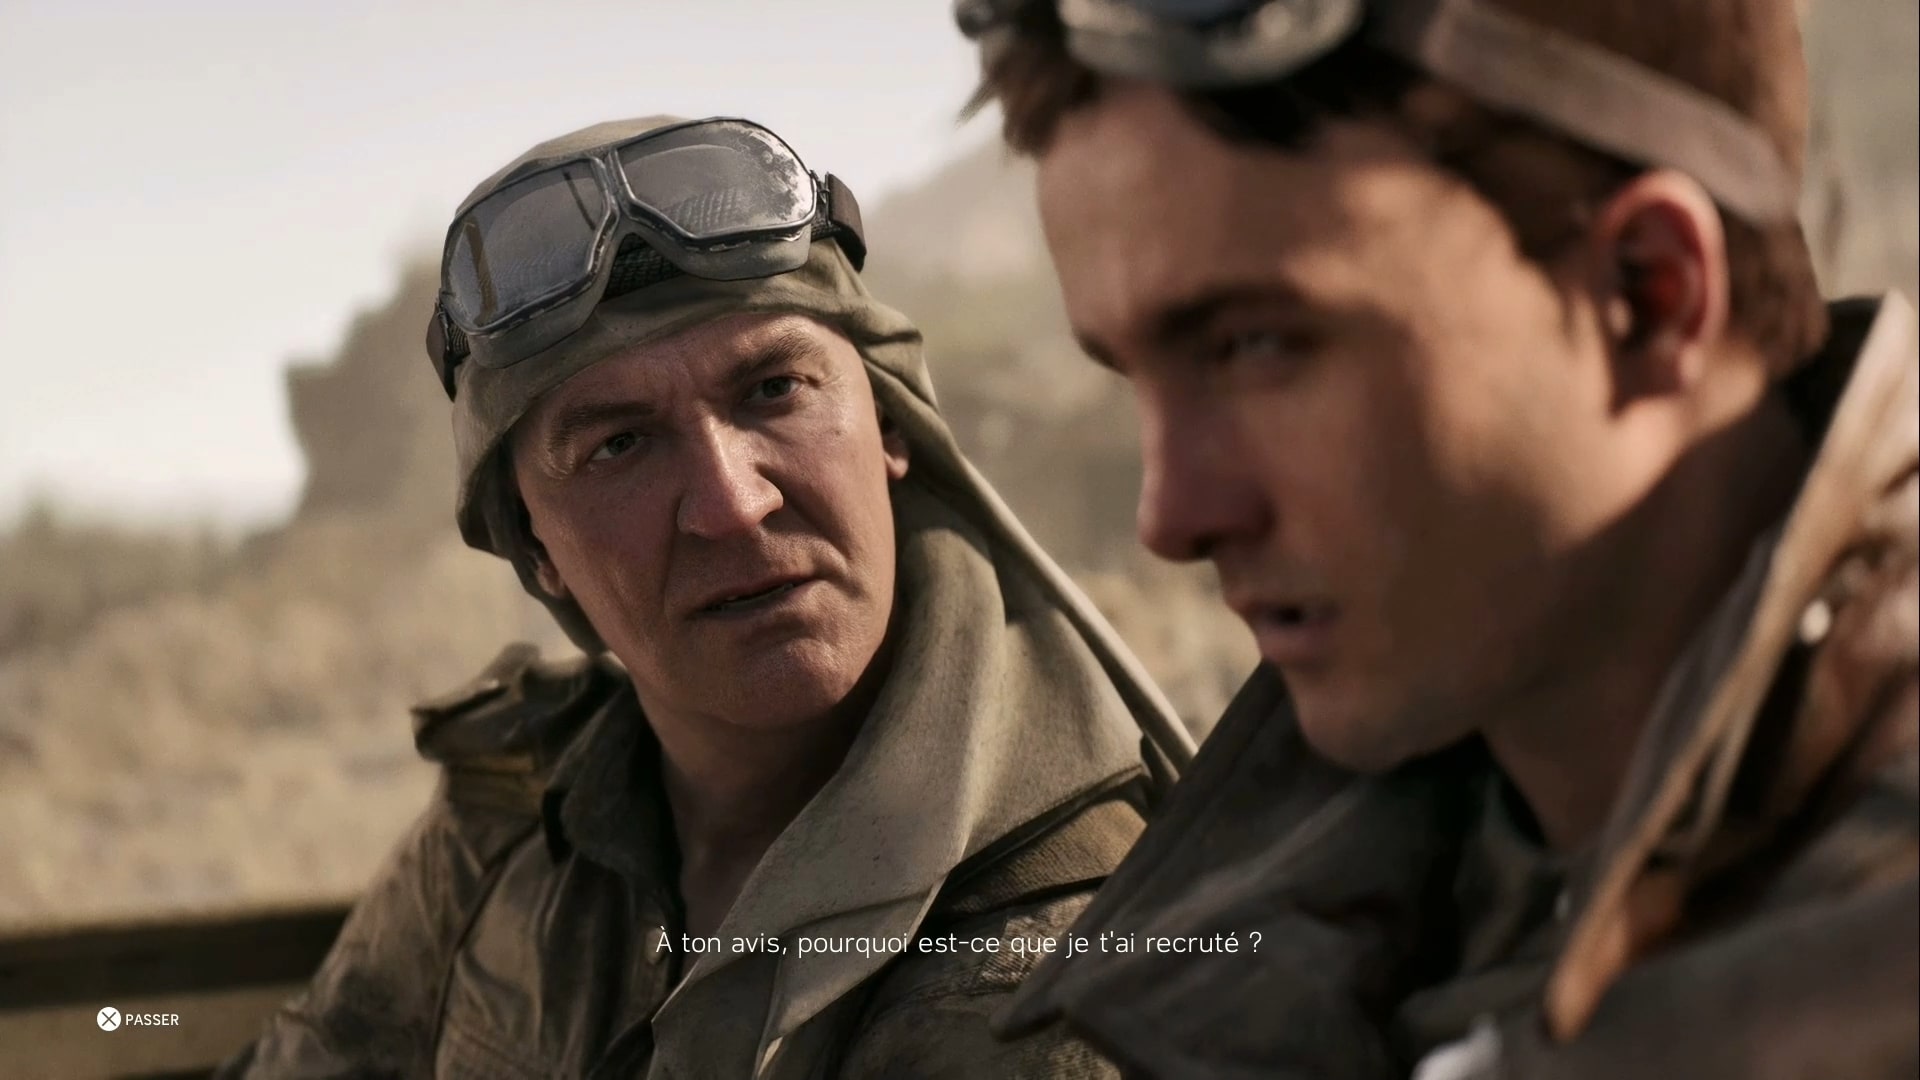 Battlefield V PS5 [Nordlys 1st Mission Part 2 Walkthourgh] BF5